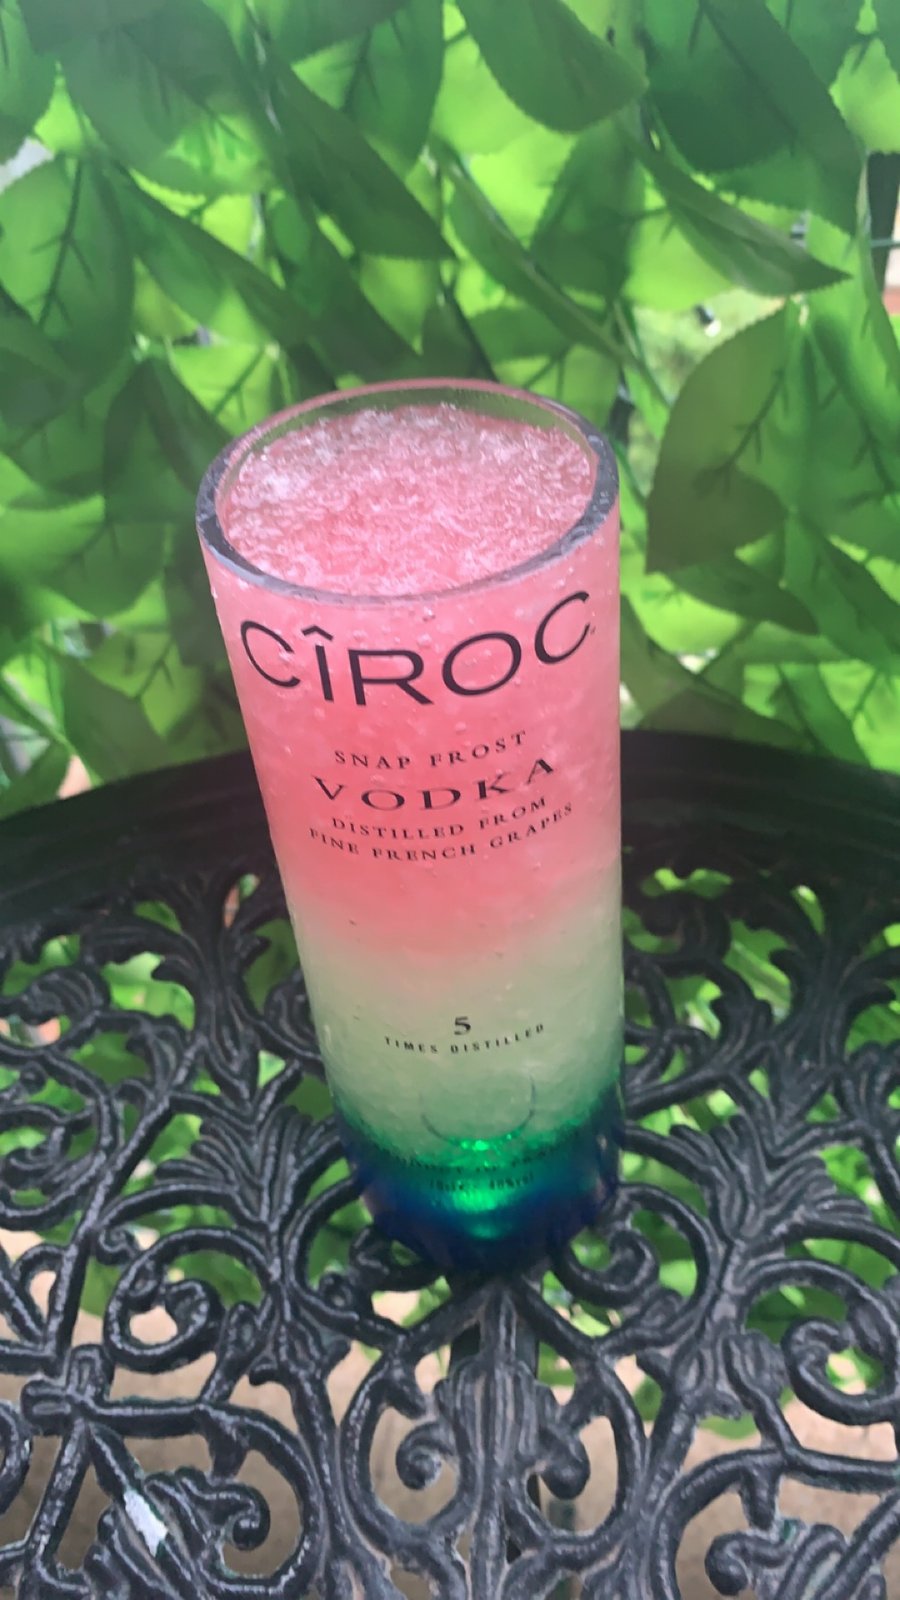 Ciroc bottle glass